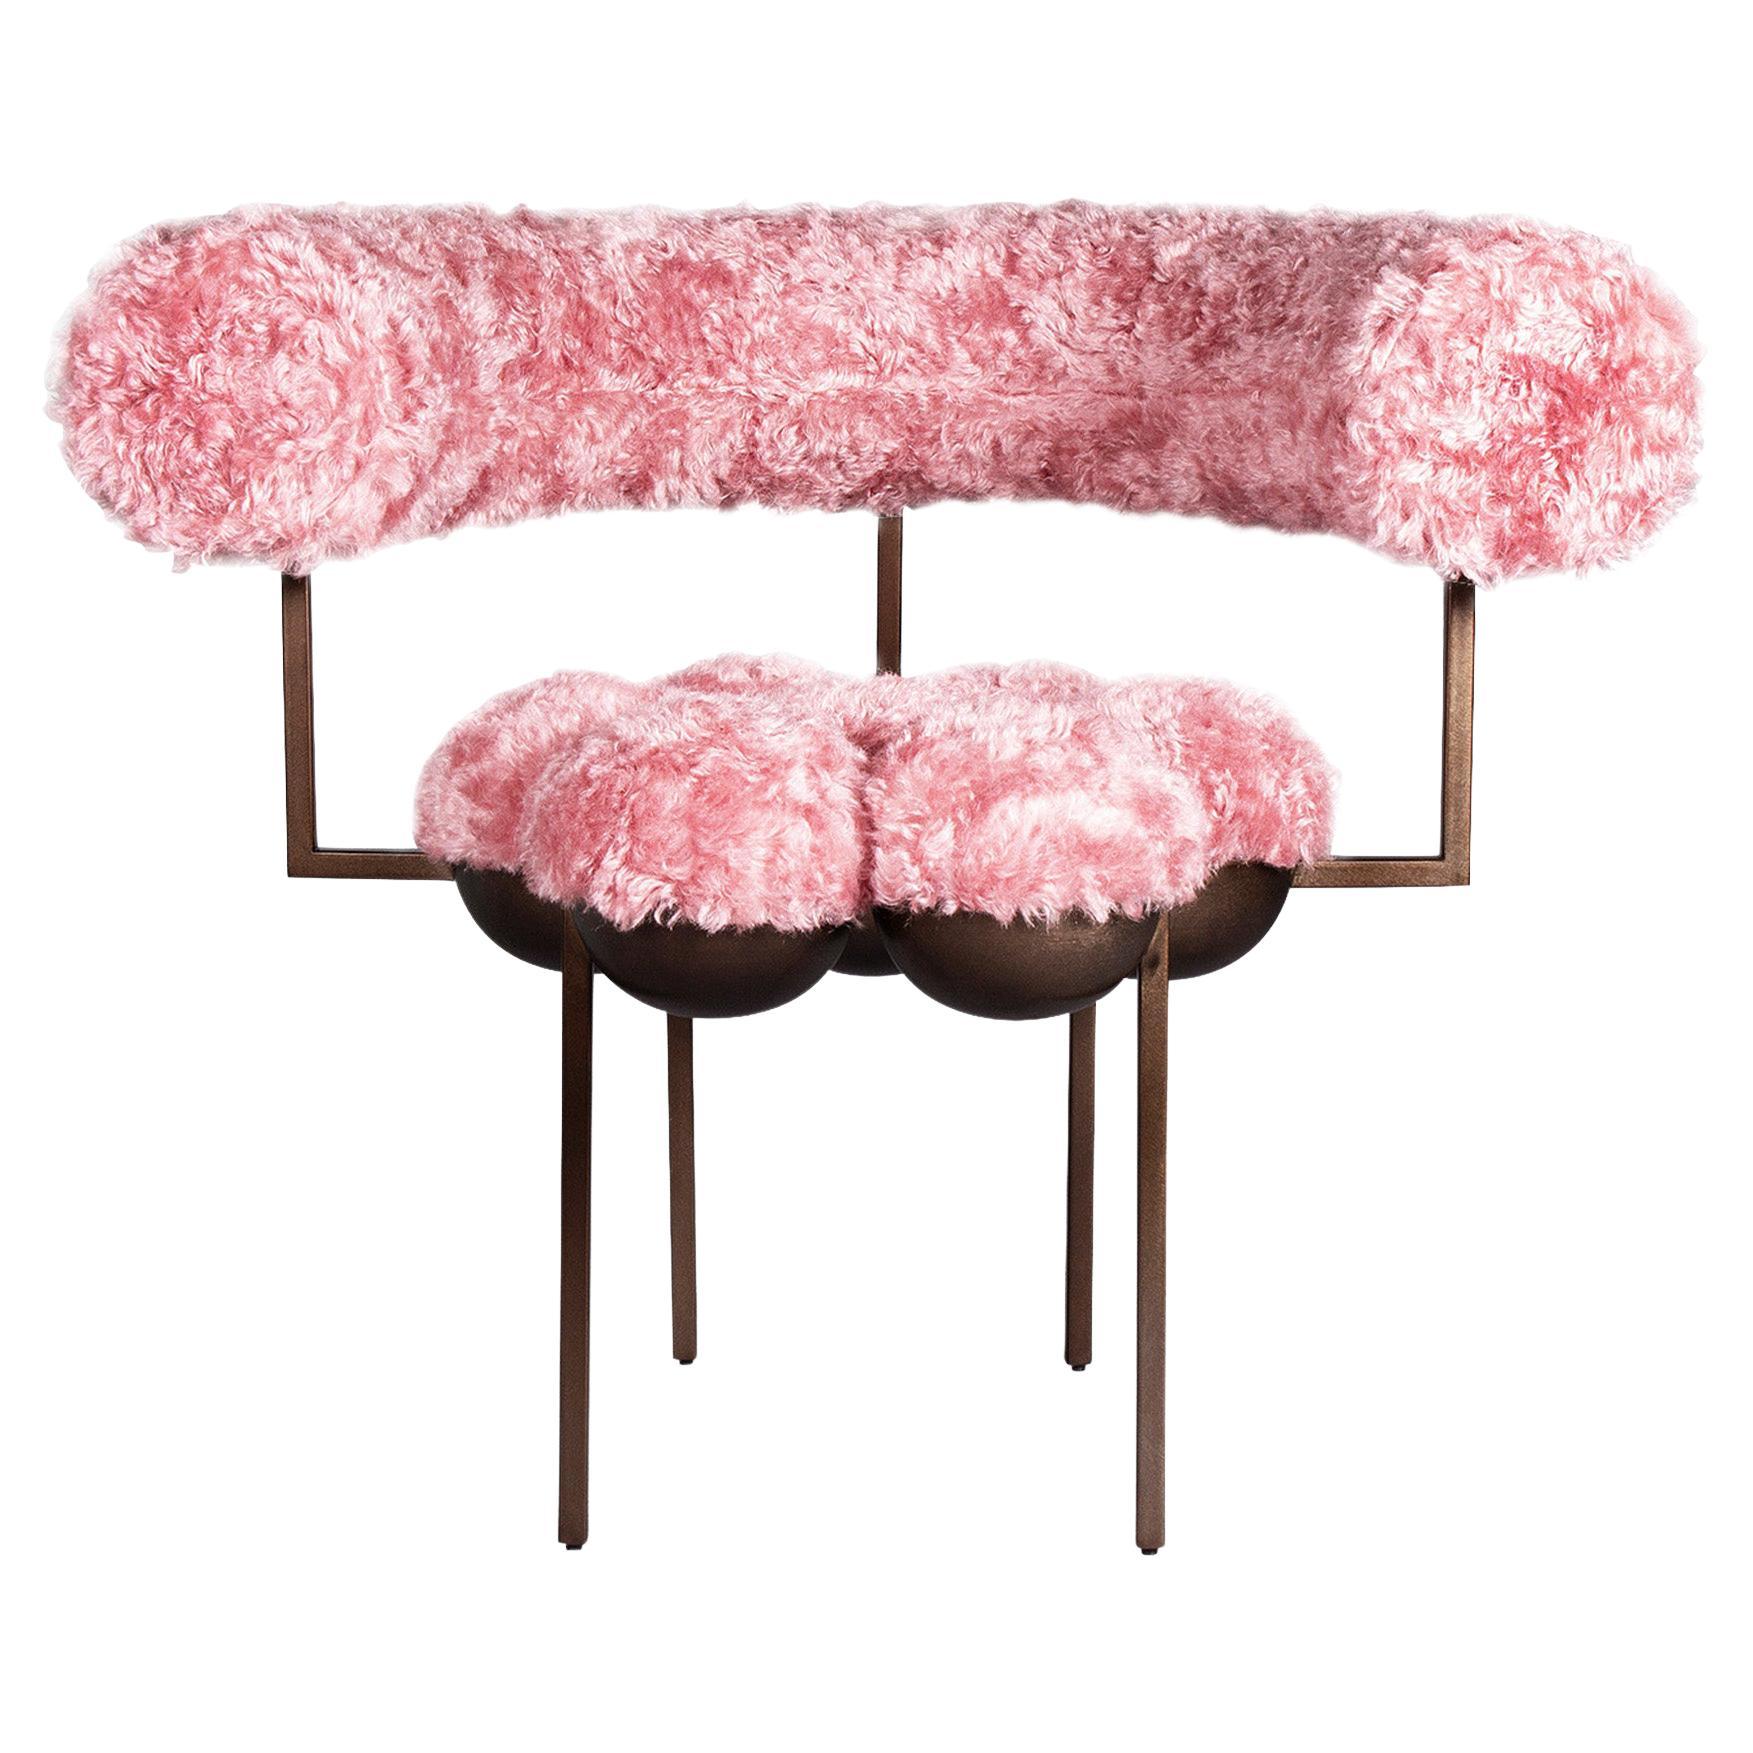 Saturn Chair, Furry Pink Fabric by Lara Bohinc, in stock